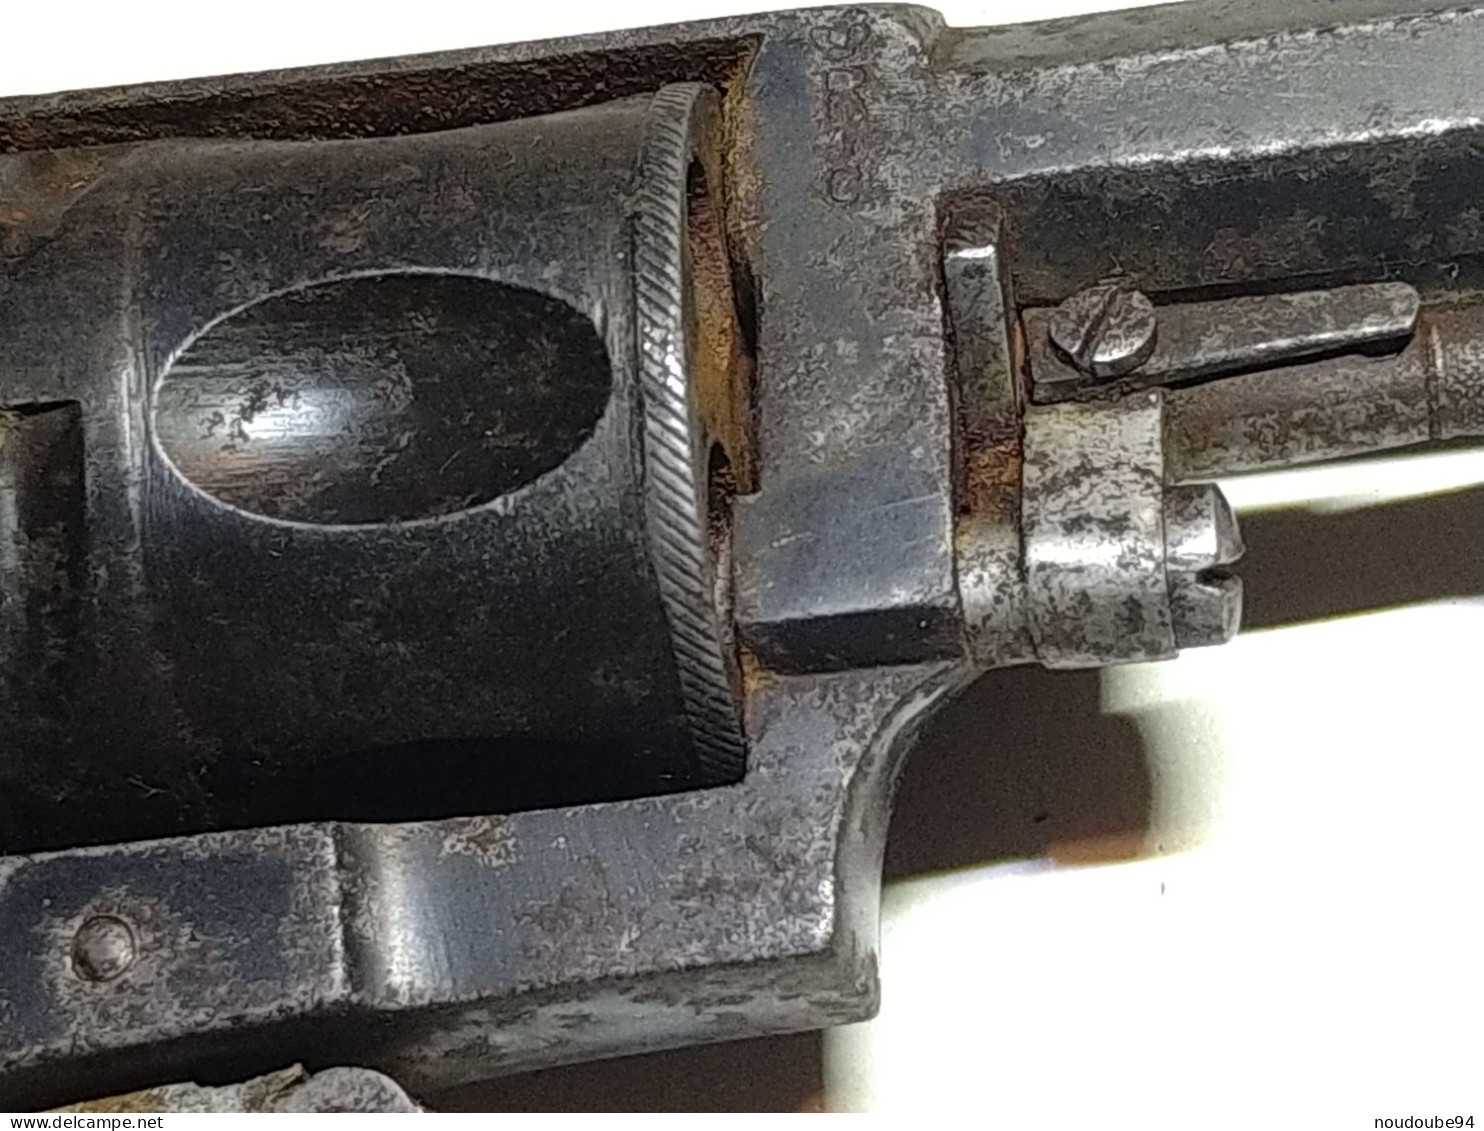 Ancien Revolver militaria a restaurer arme